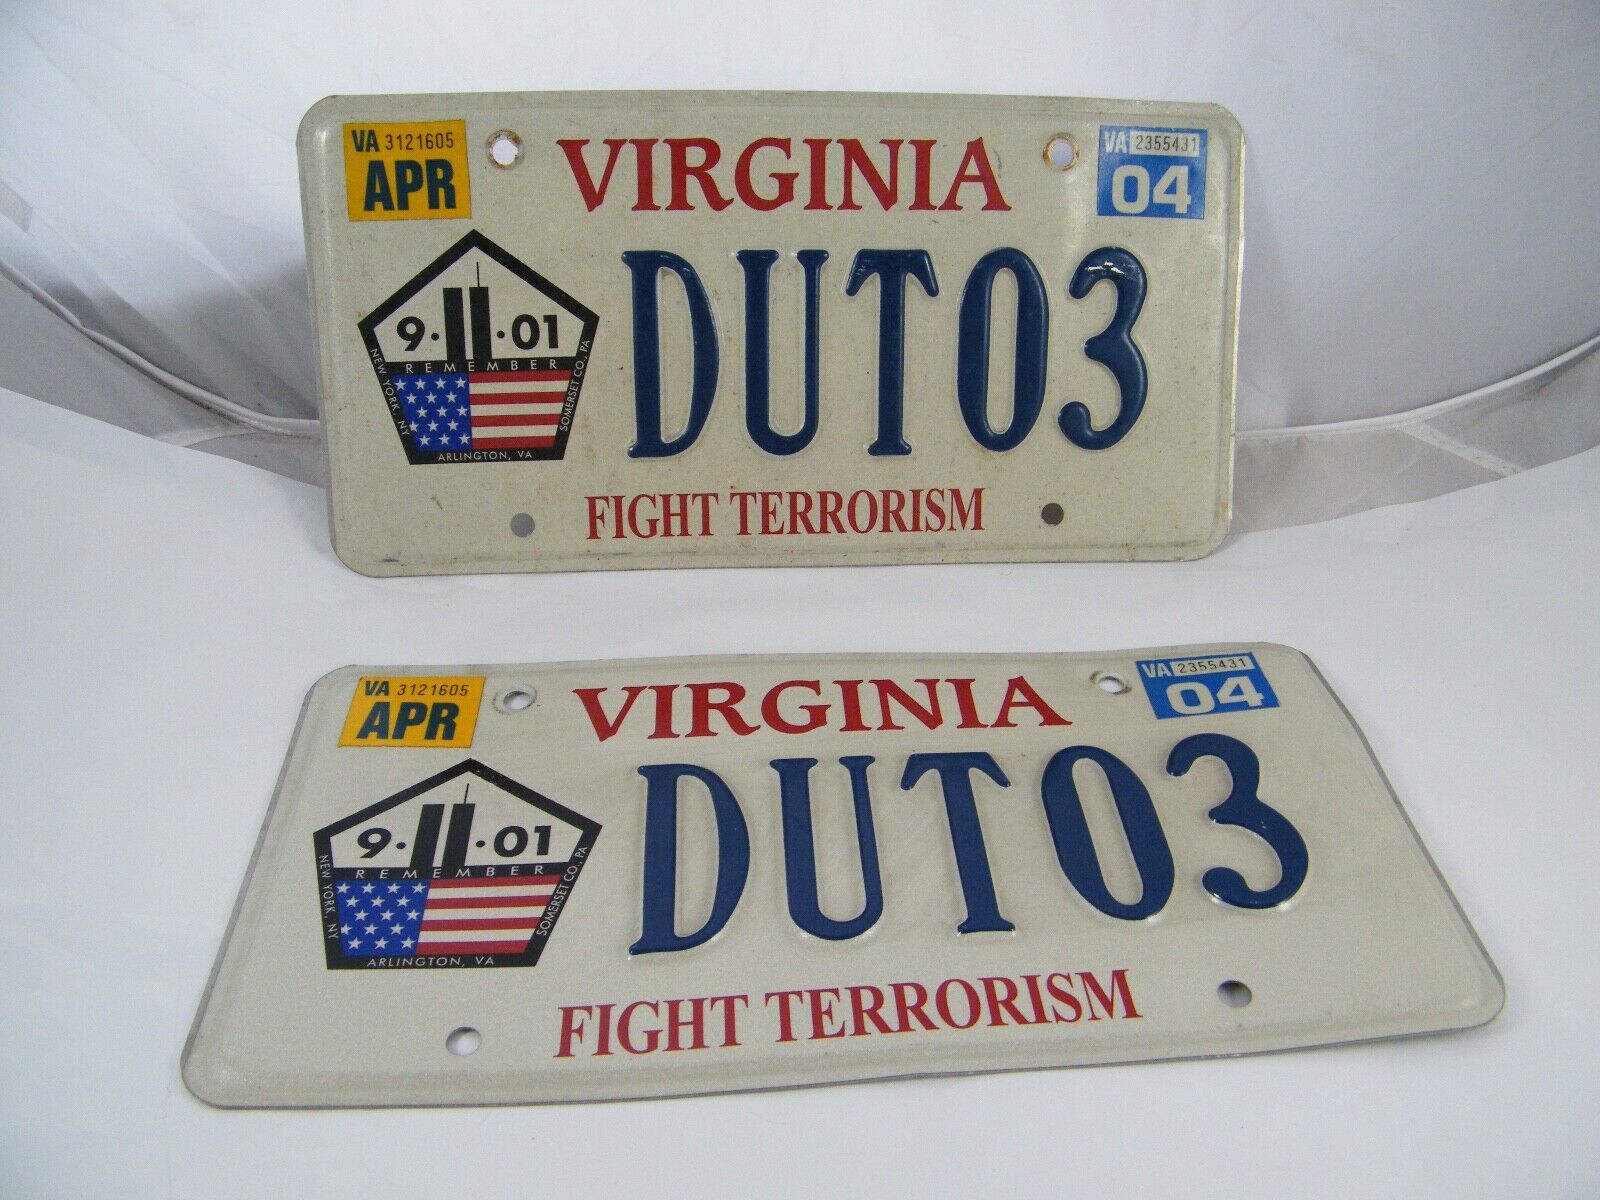  2004 VIRGINIA ~ FIGHT TERRORISM ~ REMEMBER 9-11-01 ~ DUT03  LICENSE PLATES